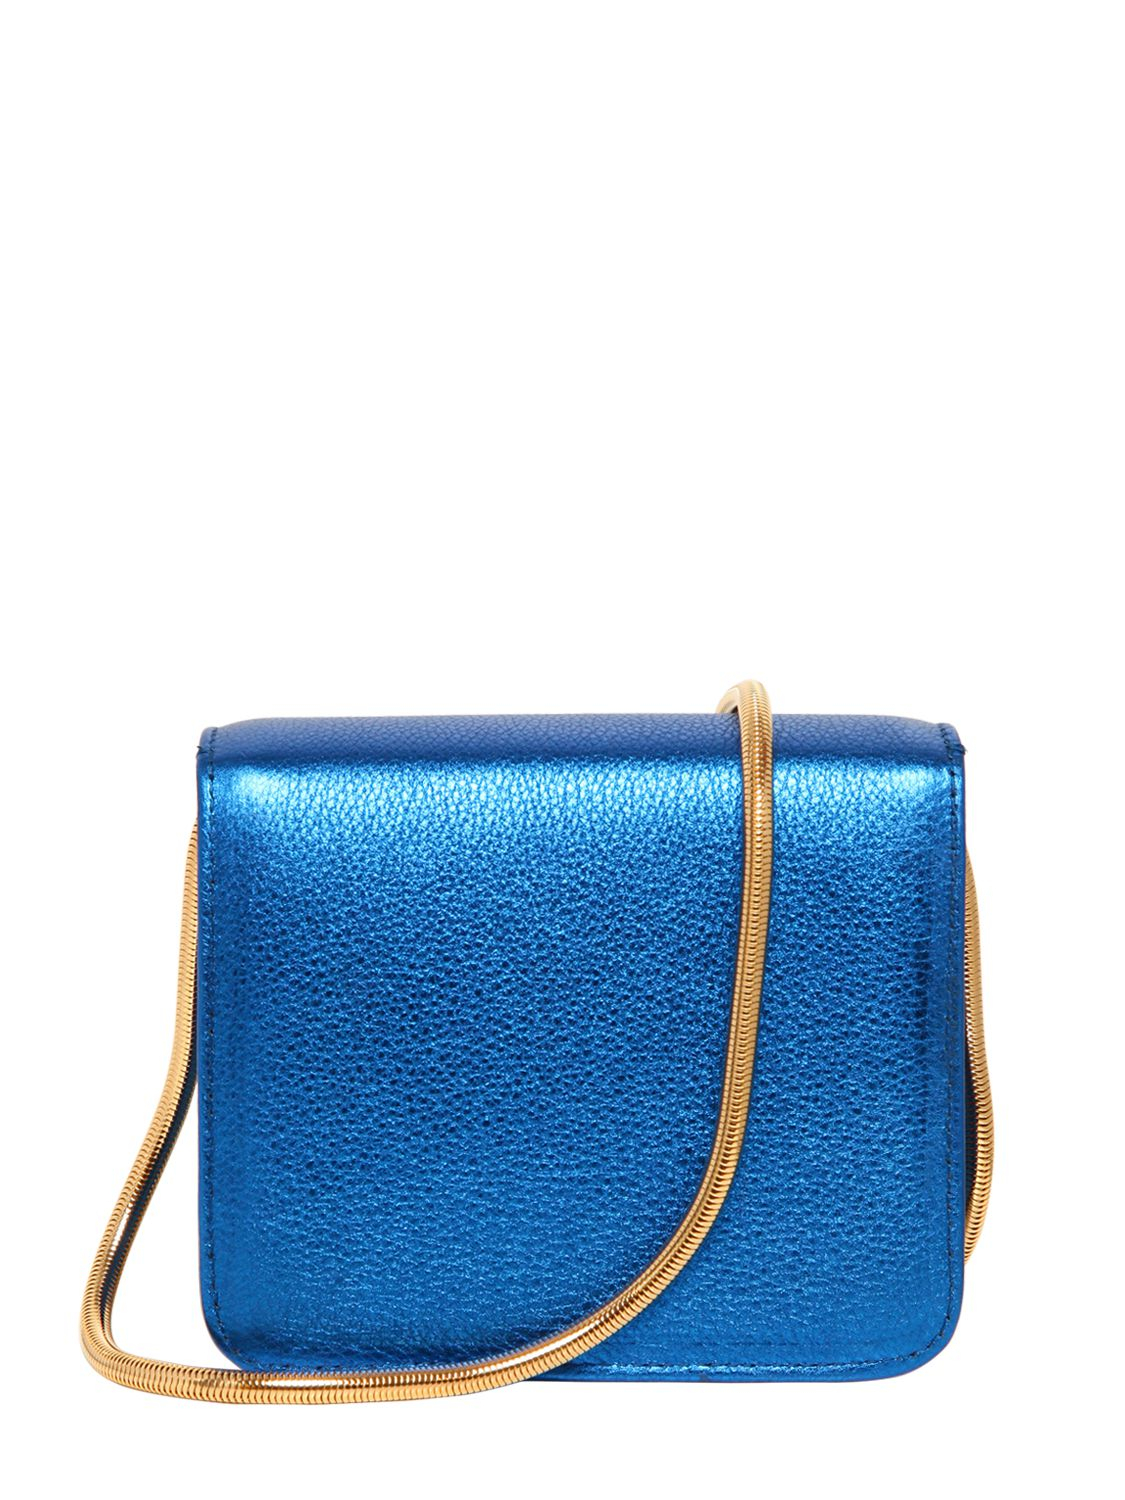 Lyst - Giuseppe Zanotti Grained Metallic Leather Shoulder Bag in Blue